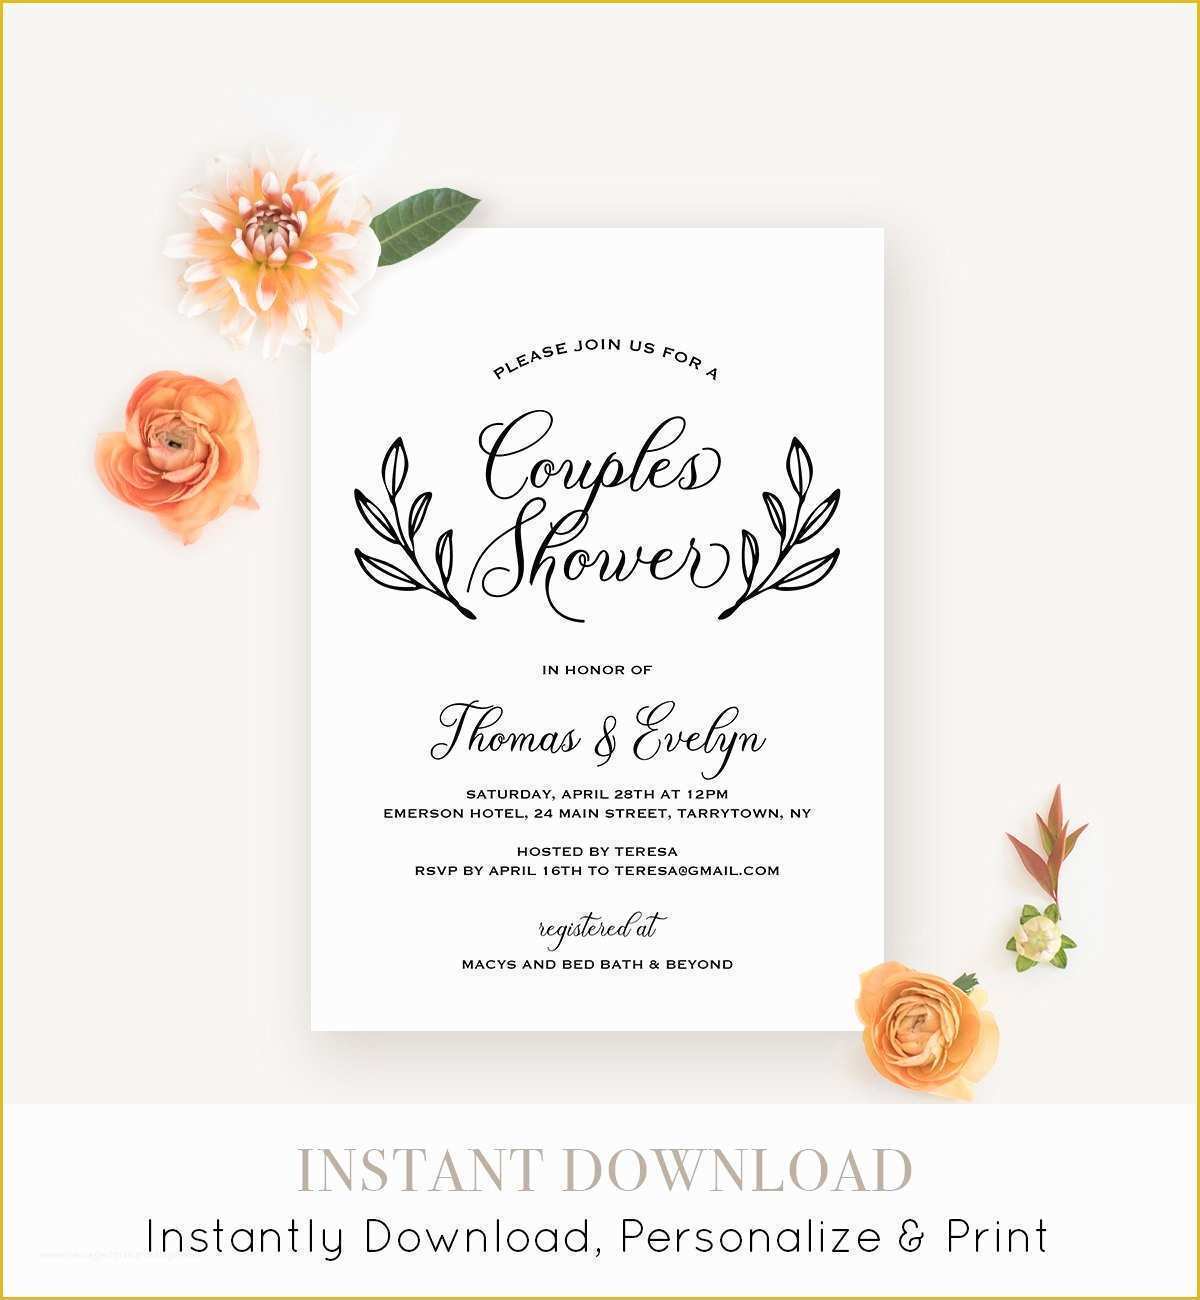 Couples Wedding Shower Invitations Templates Free Of Couples Shower Invitation Template Printable Wedding Shower